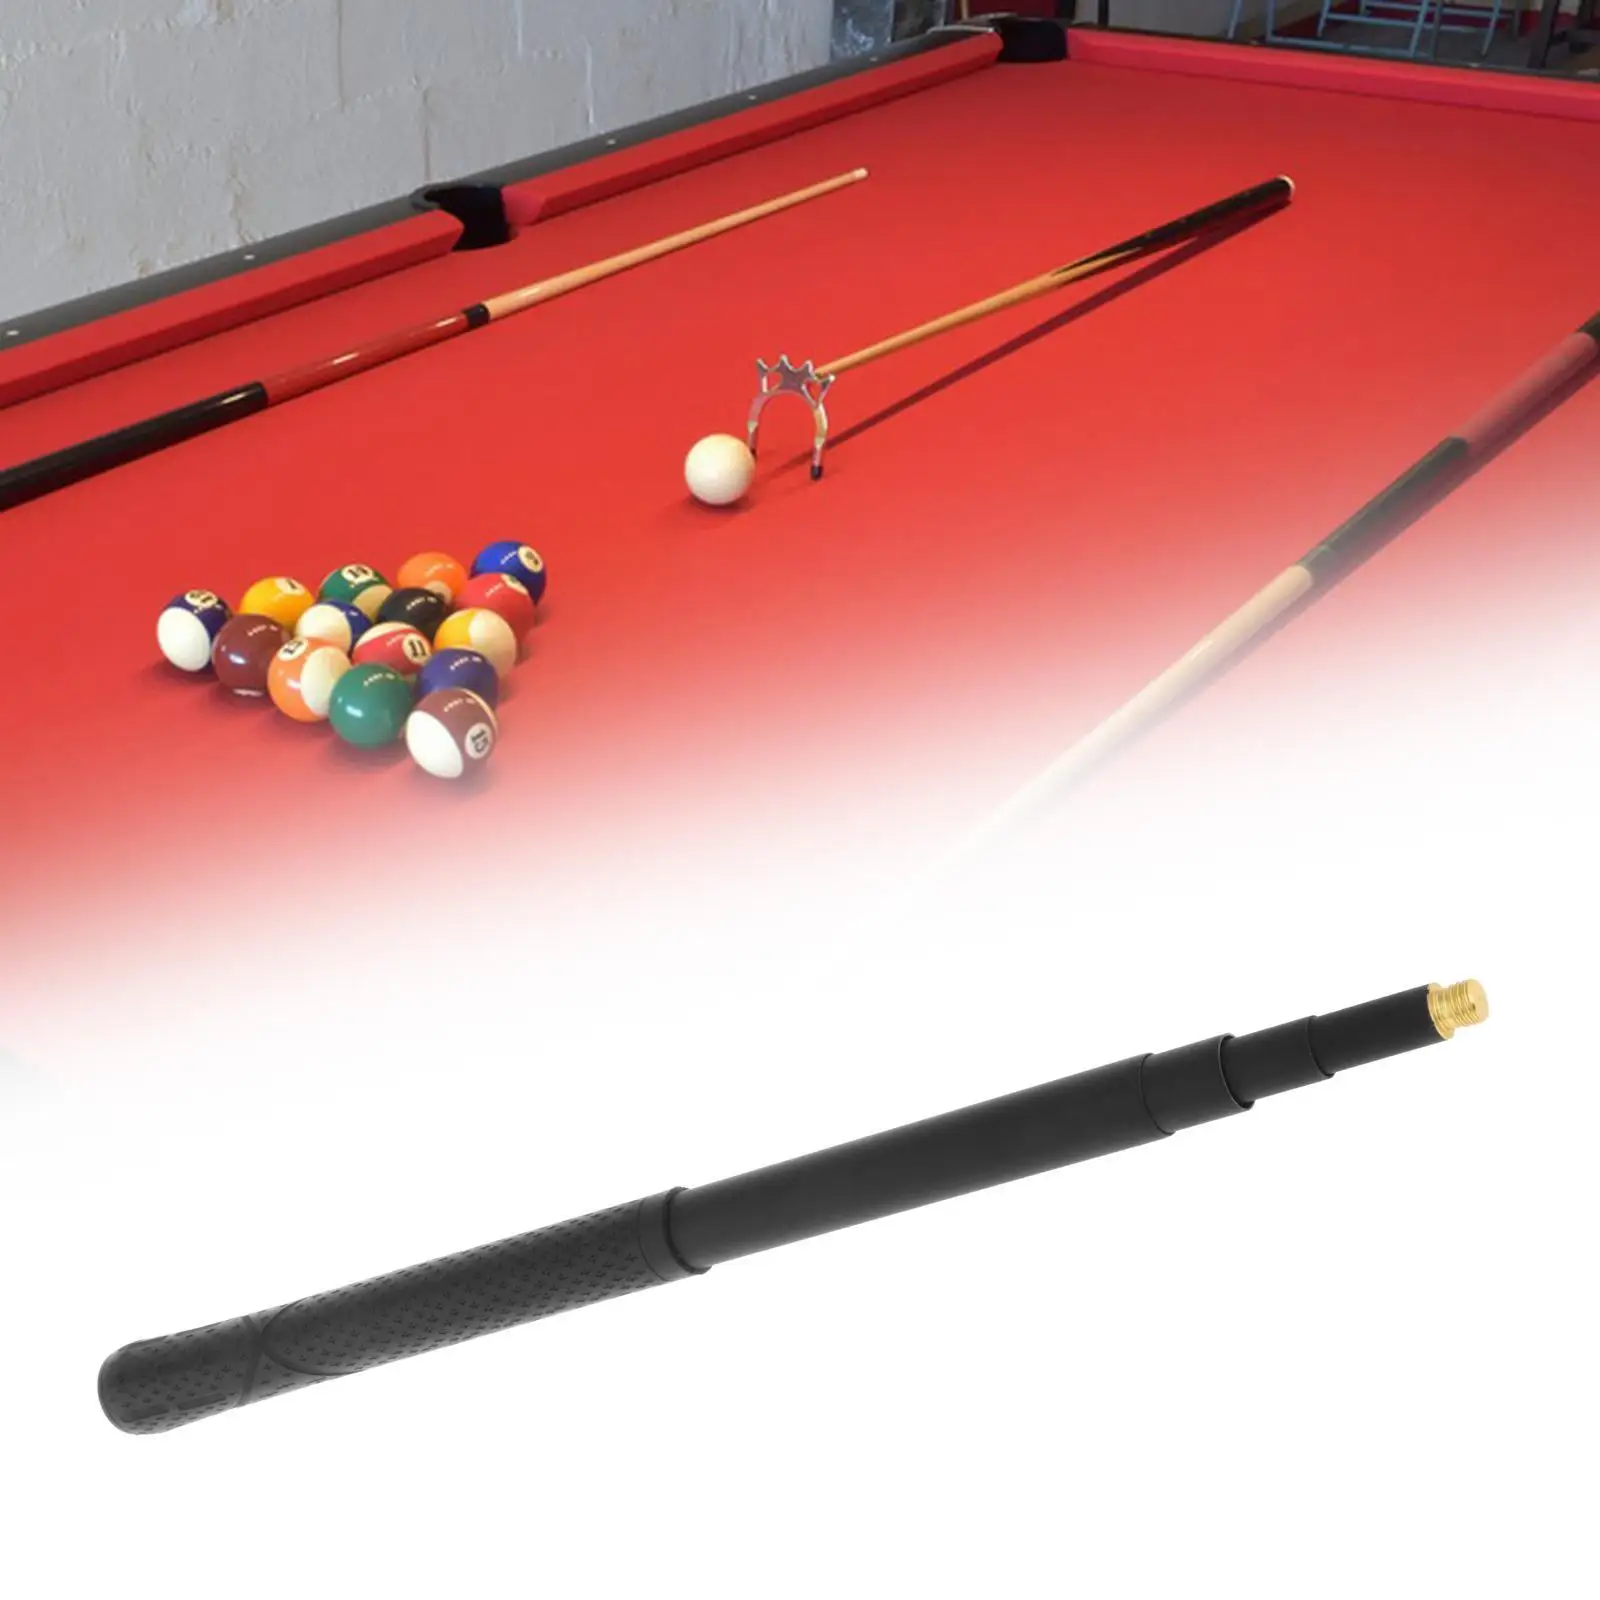 Pool Cue Bridge Sticks Extendable Portable Billiards Cue Sticks Pool Cue Sticks for Pool Table Snooker Training Accessories